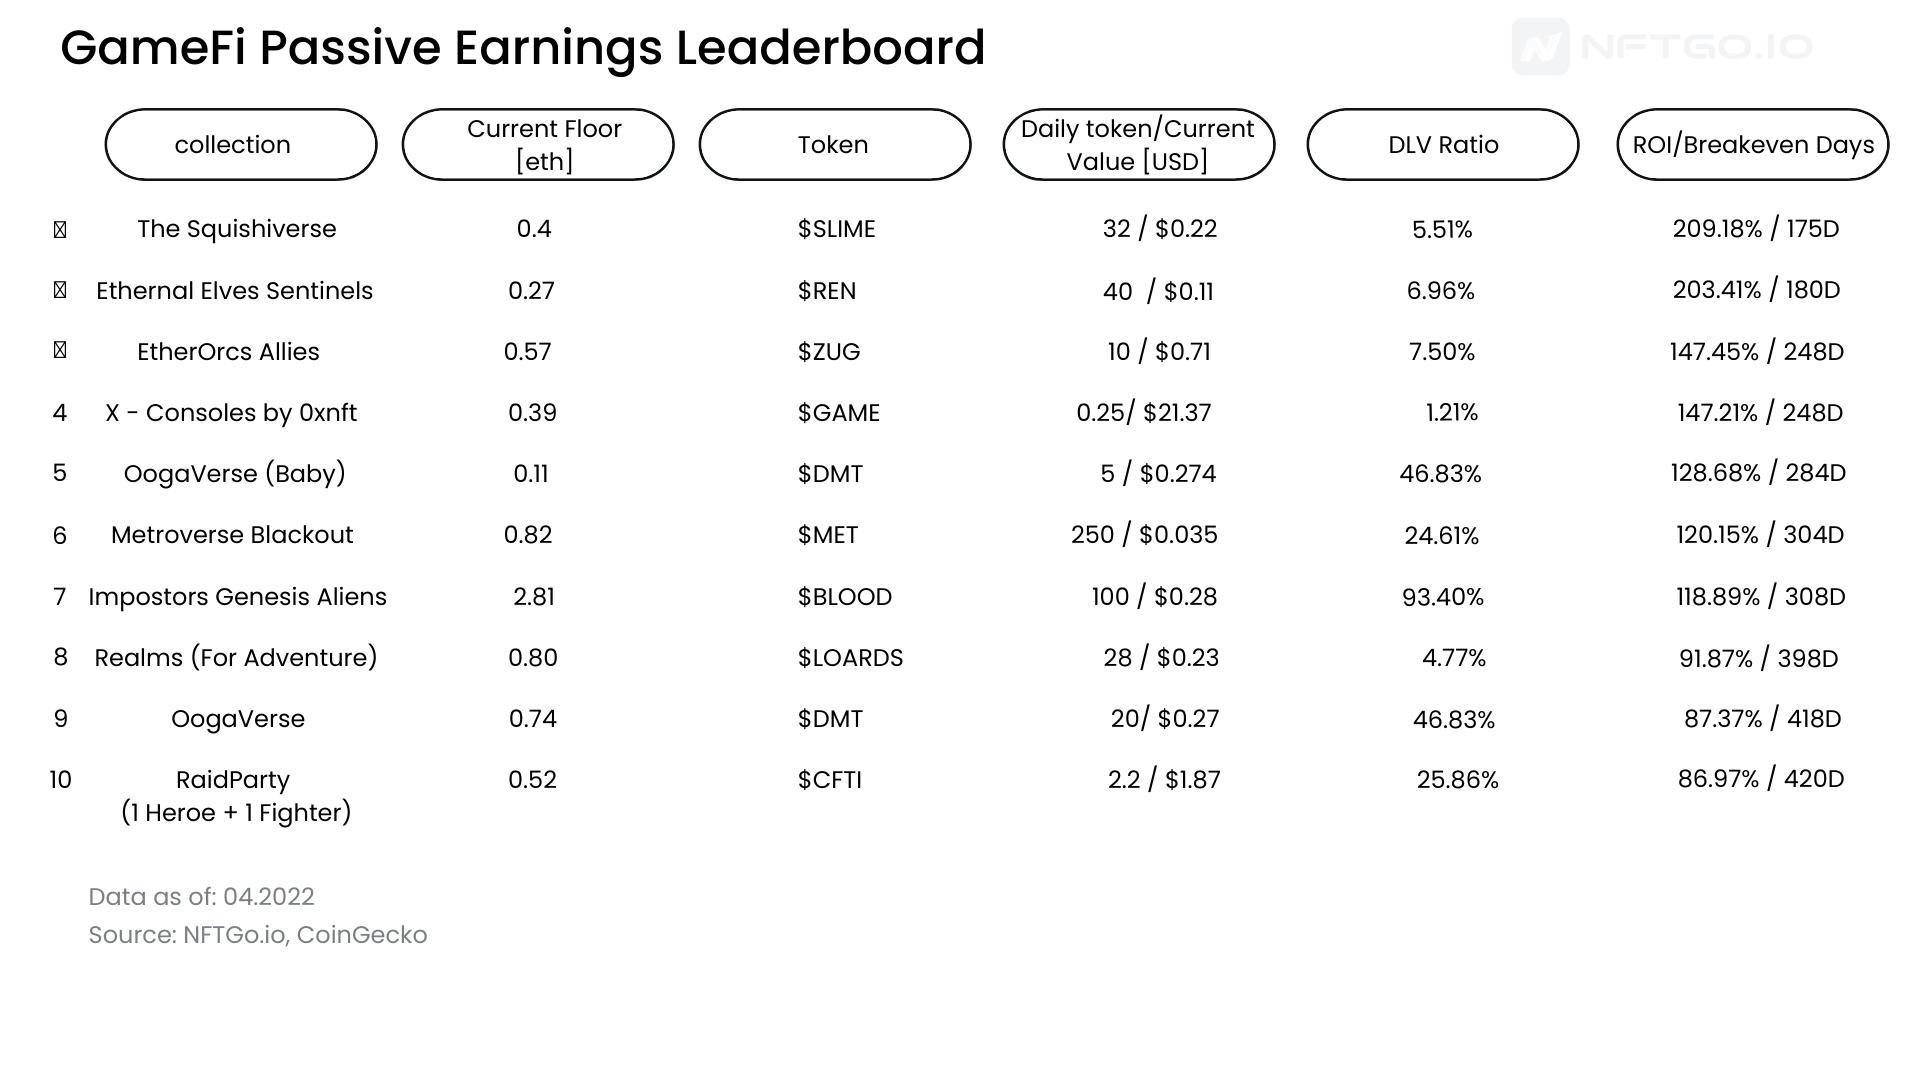 GameFi passive earnings leaderboard. (Source: NFTGo.io)